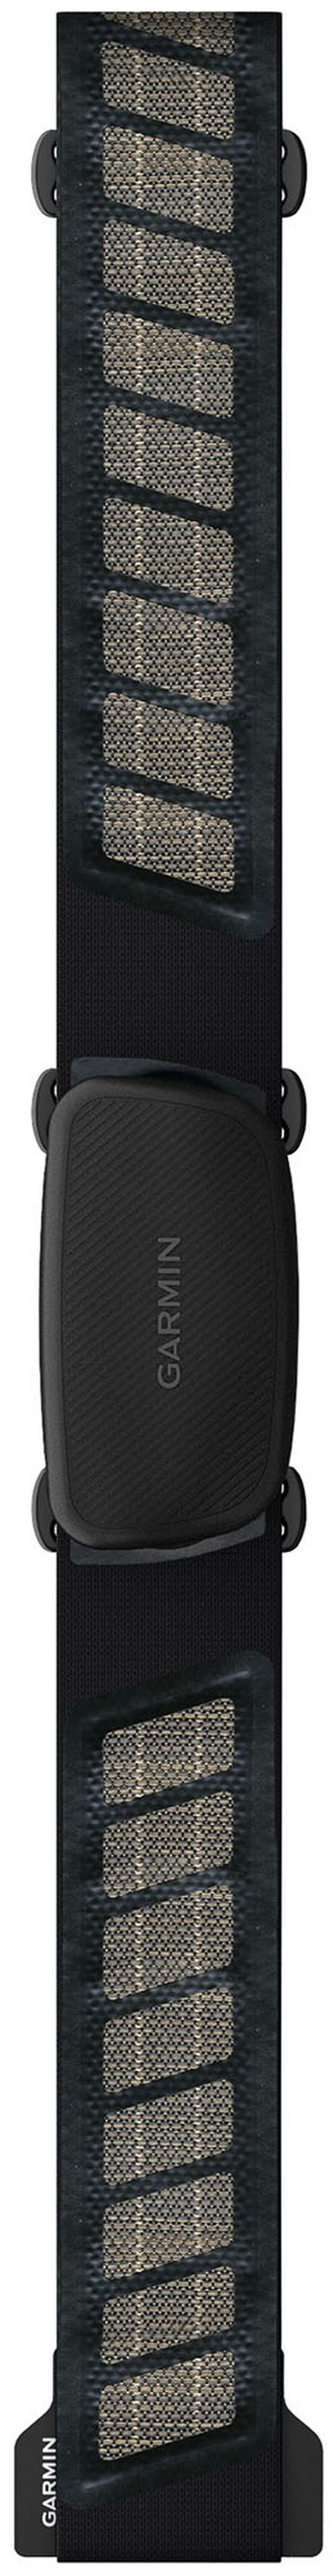 Garmin HRM-Dual - Premium Heart Rate Monitor Chest Strap, Real